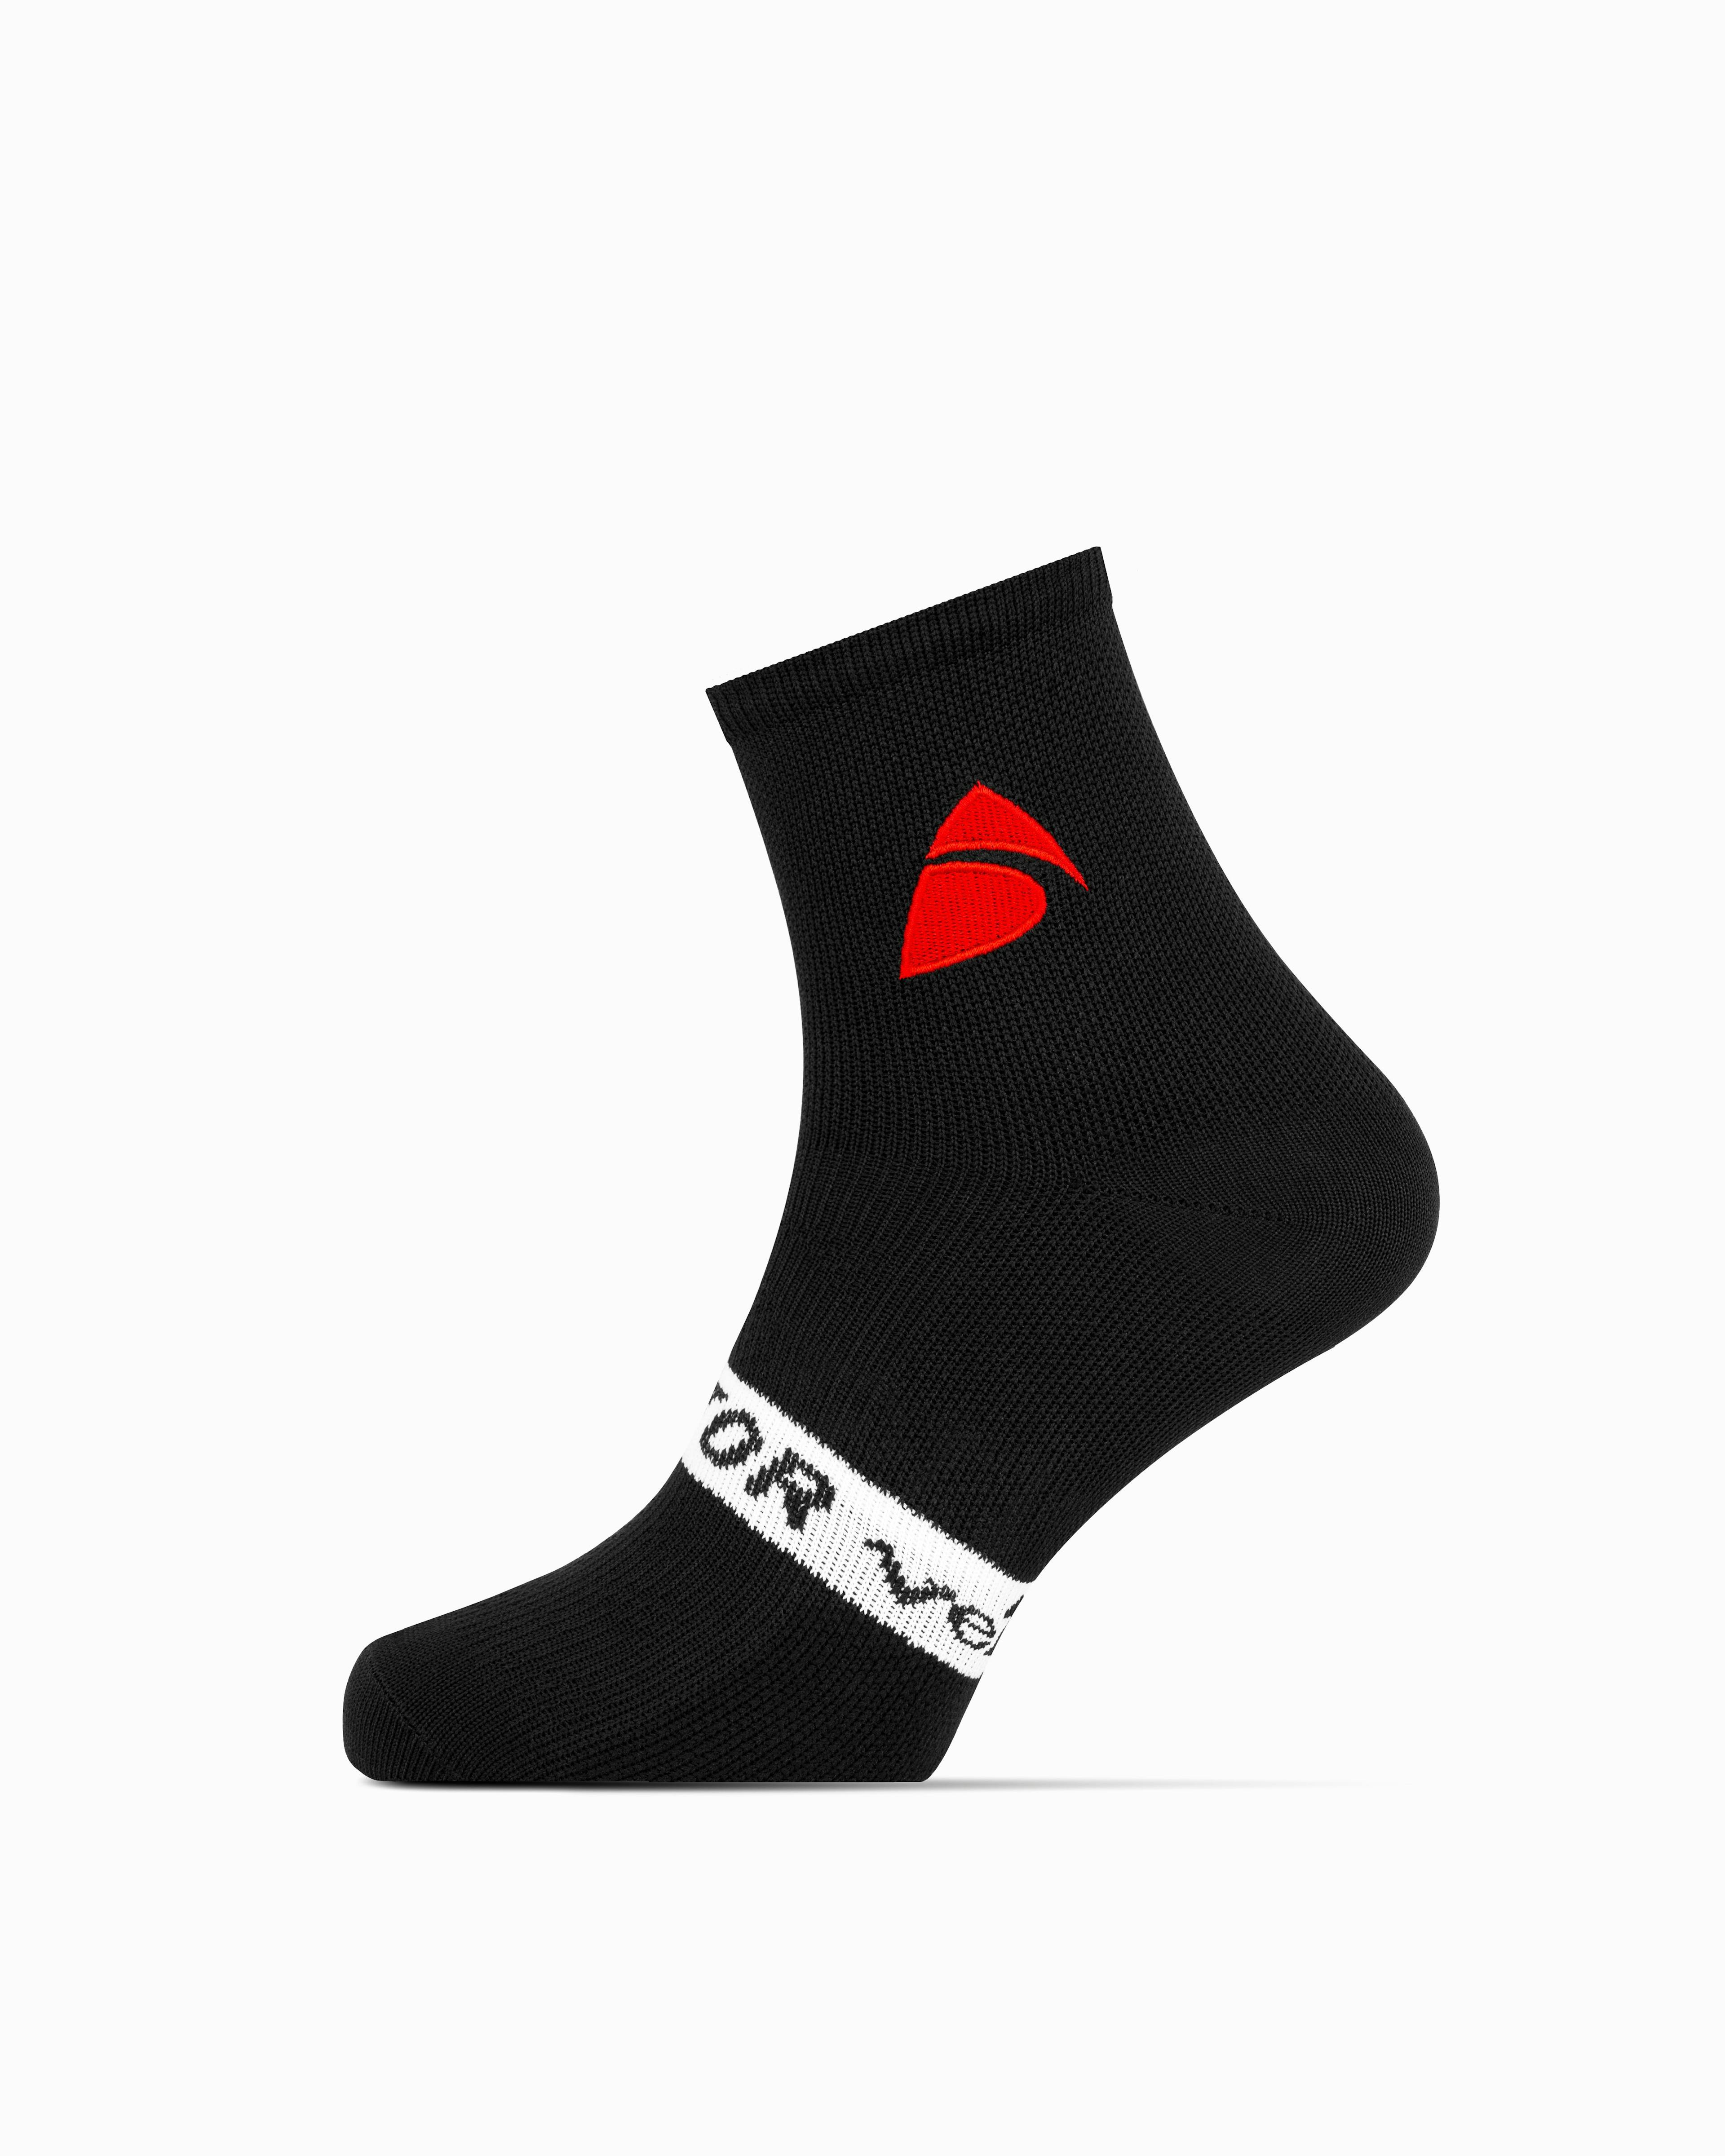 Factor Socks (Black)